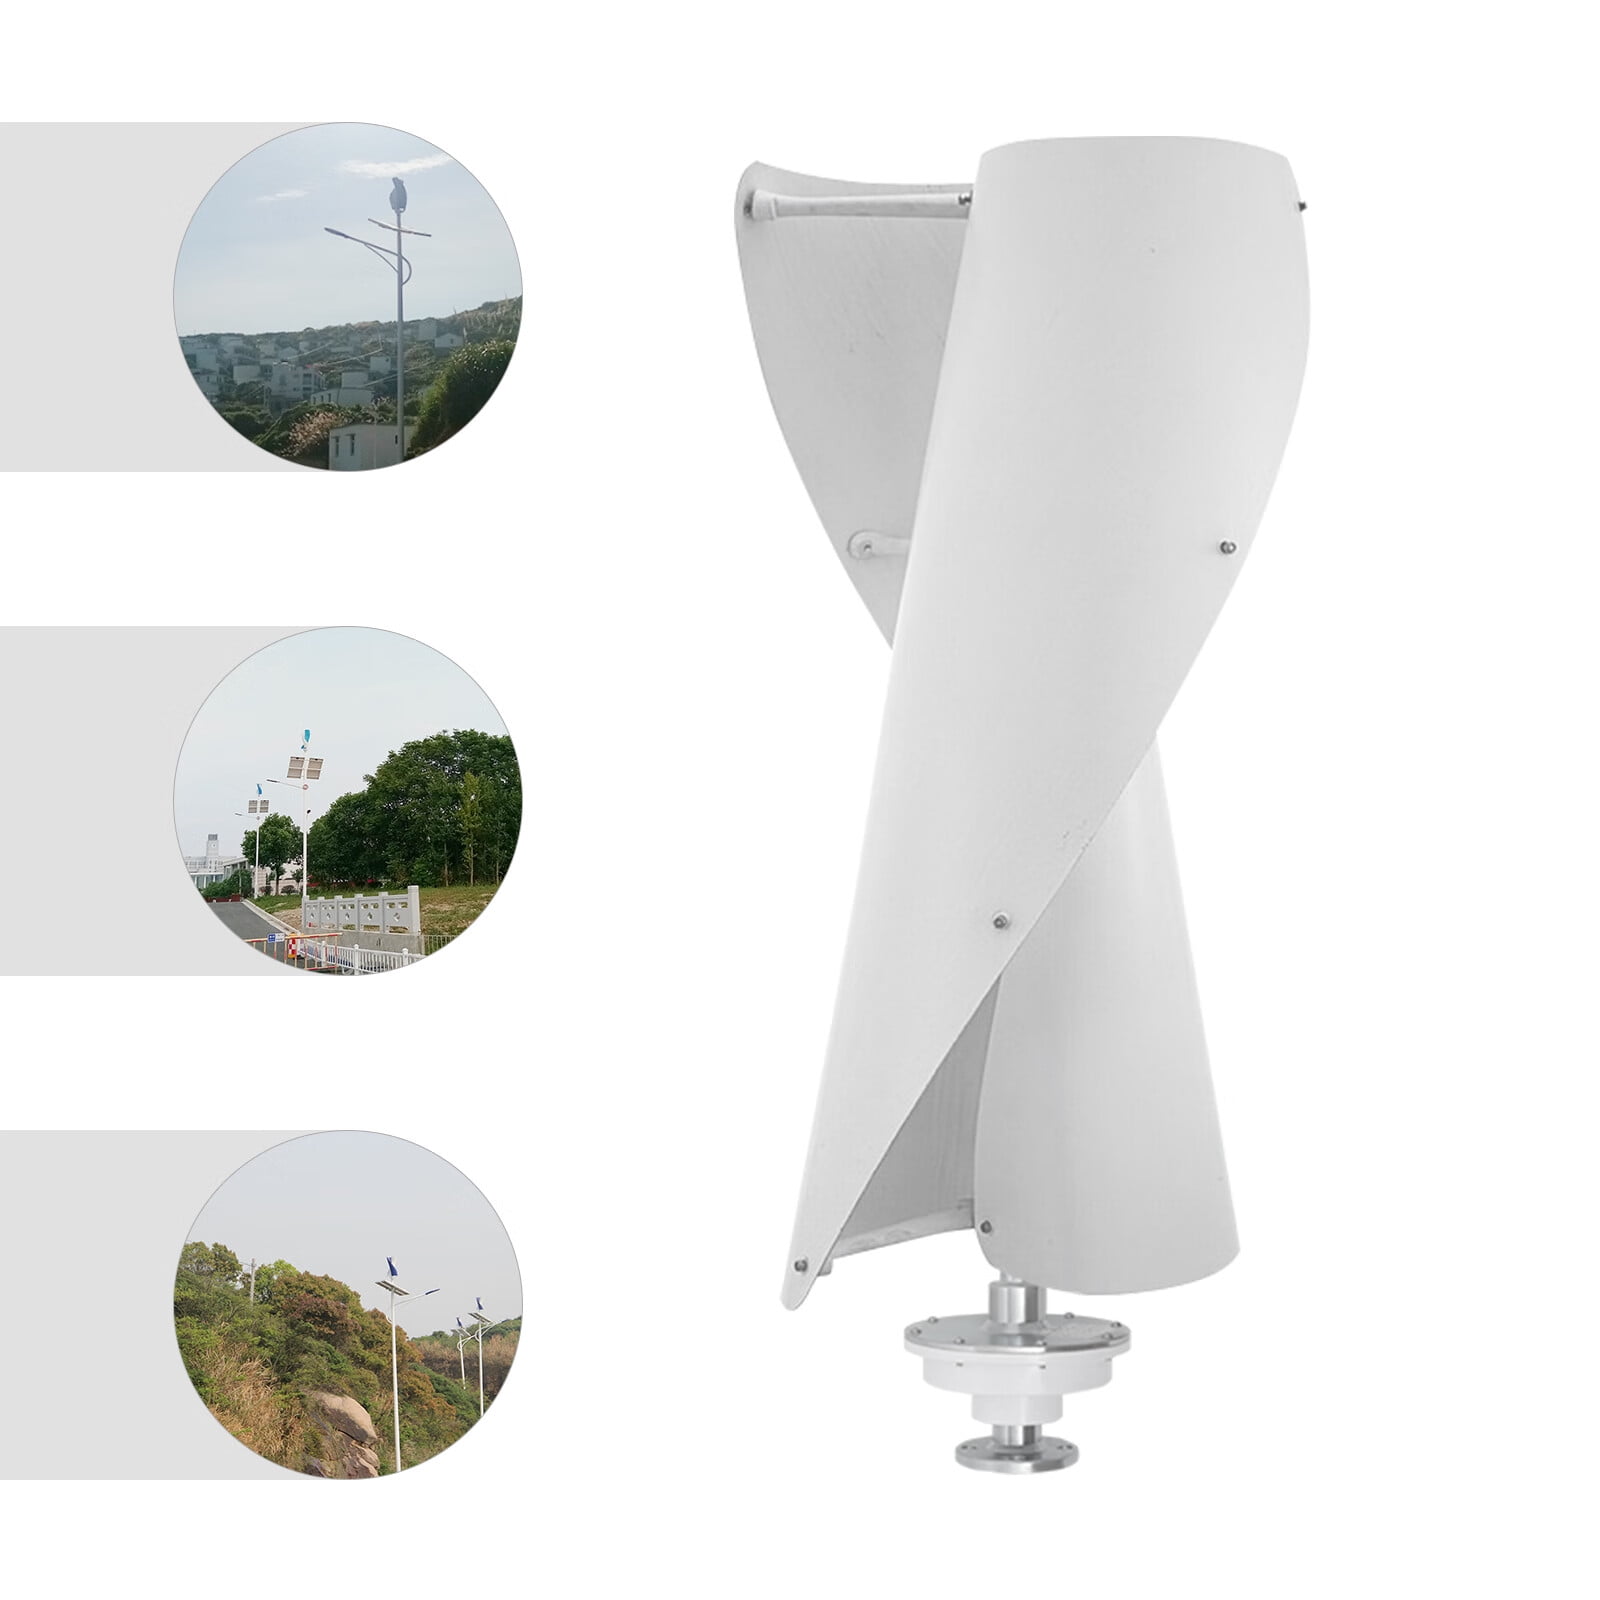 Aiqidi 400W Wind Power Turbine Generator Vertical Helix Maglev Wind Turbine  Kit w/Controller 2 Blades for Max Wind Speed ≤40 M/S(12V)